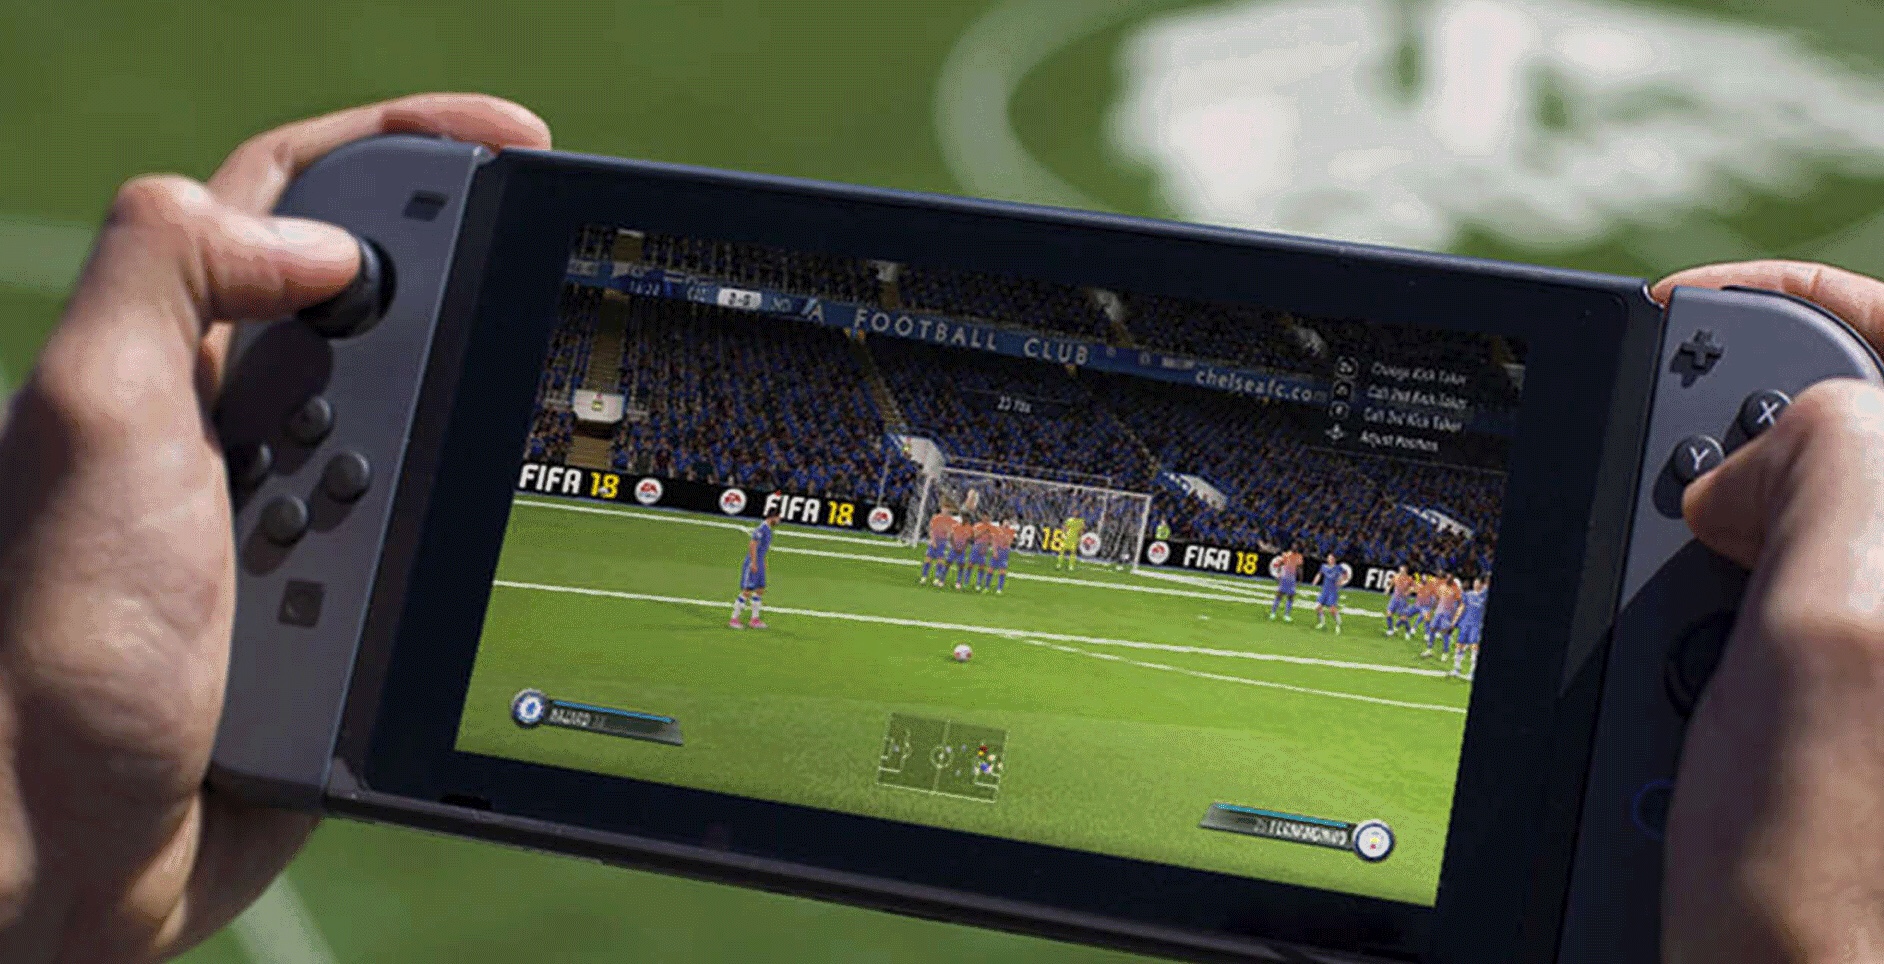 FIFA 19 On Nintendo Switch Has Online 